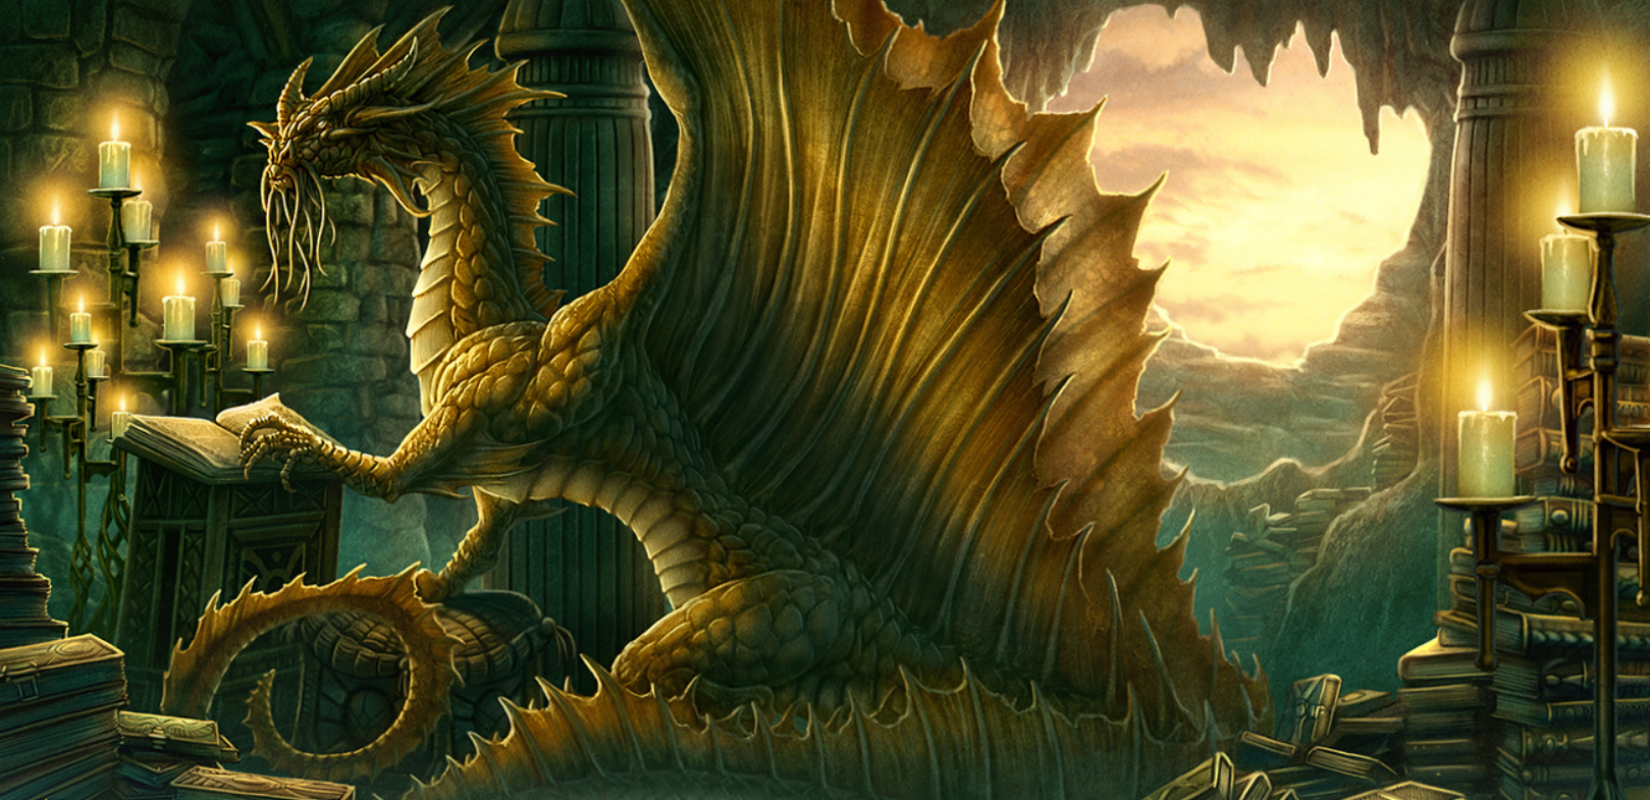 golden dragon battle creek mi